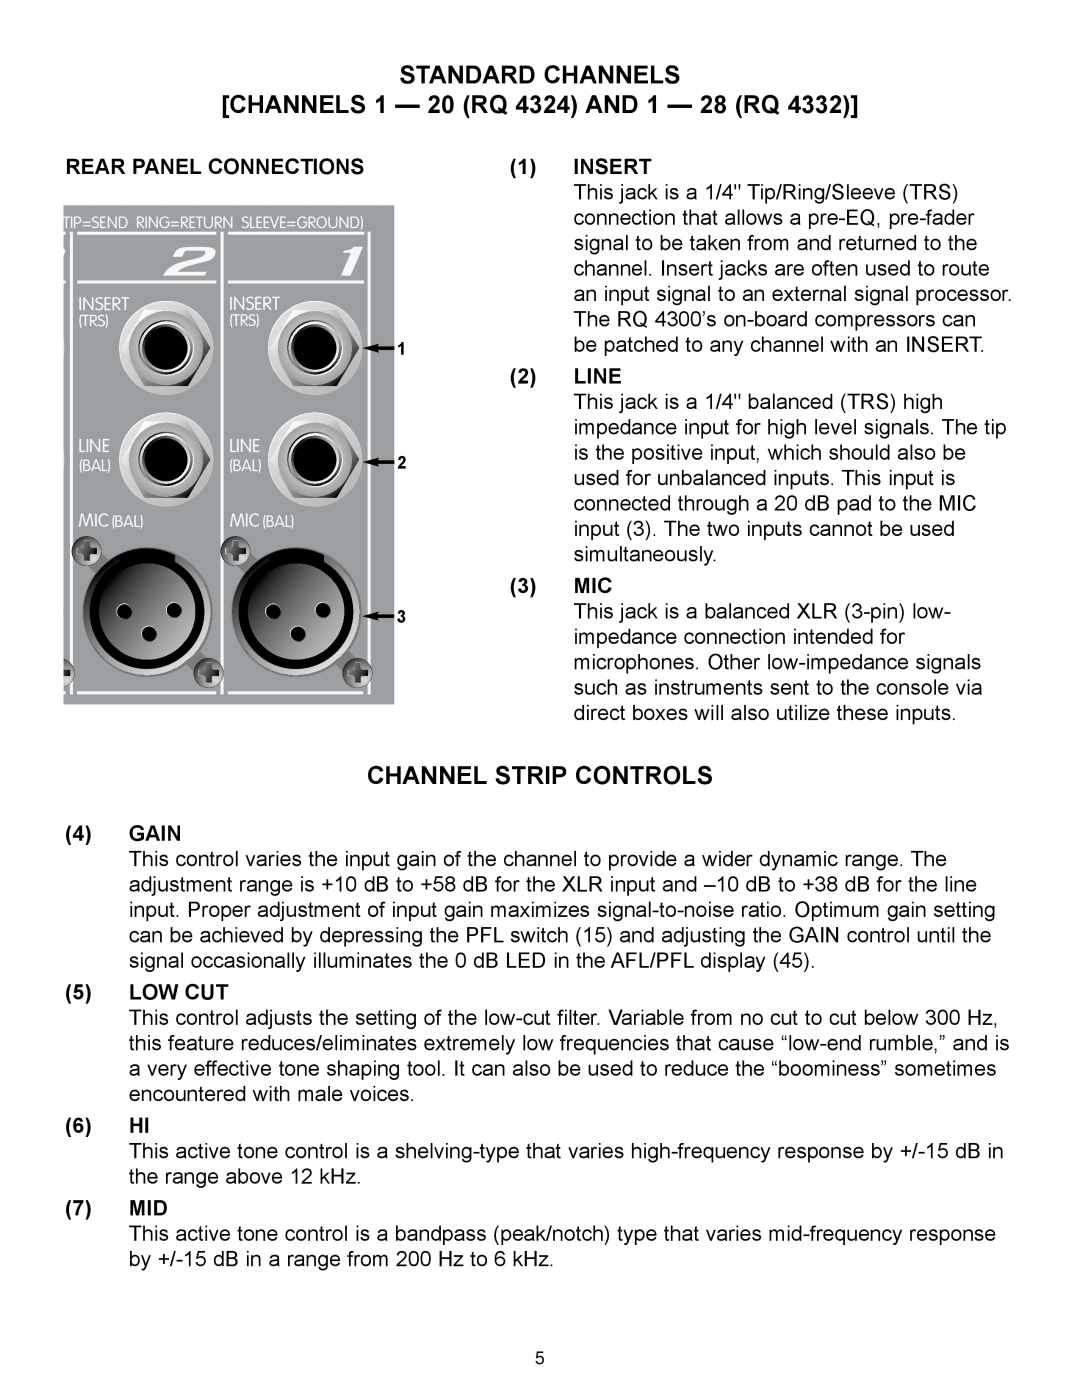 Peavey RQ 4300 Series STANDARD CHANNELS CHANNELS 1 - 20 RQ 4324 AND 1 - 28 RQ, Channel Strip Controls, Insert, Line, Gain 